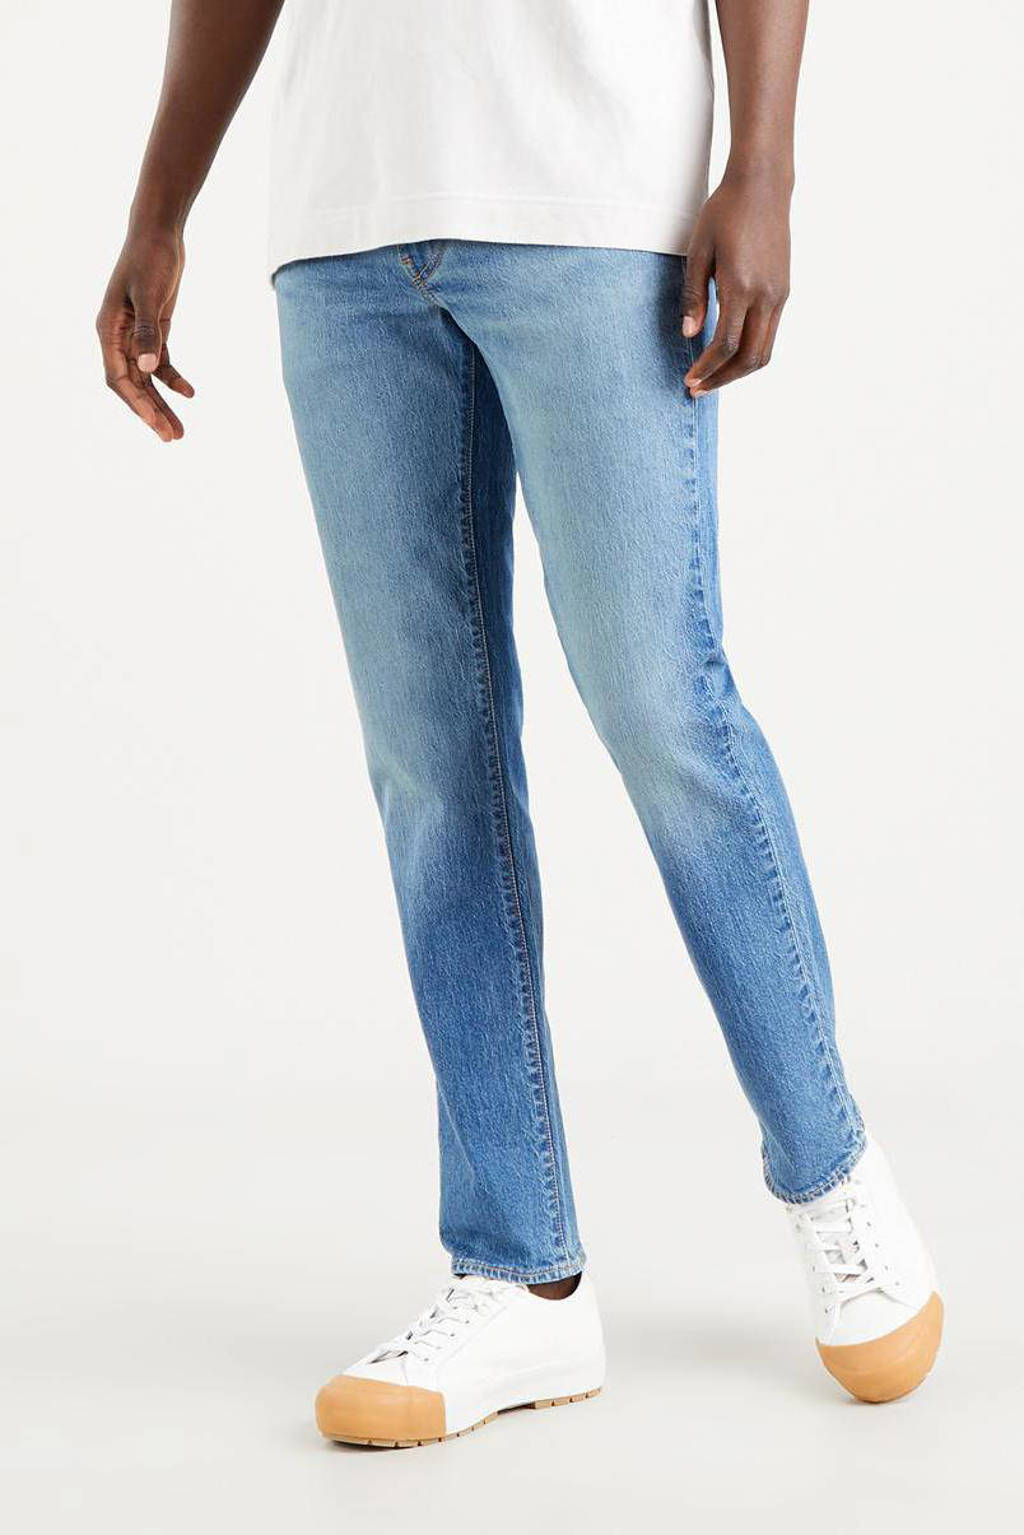 Levi's 511 slim fit jeans sellwood dance apart